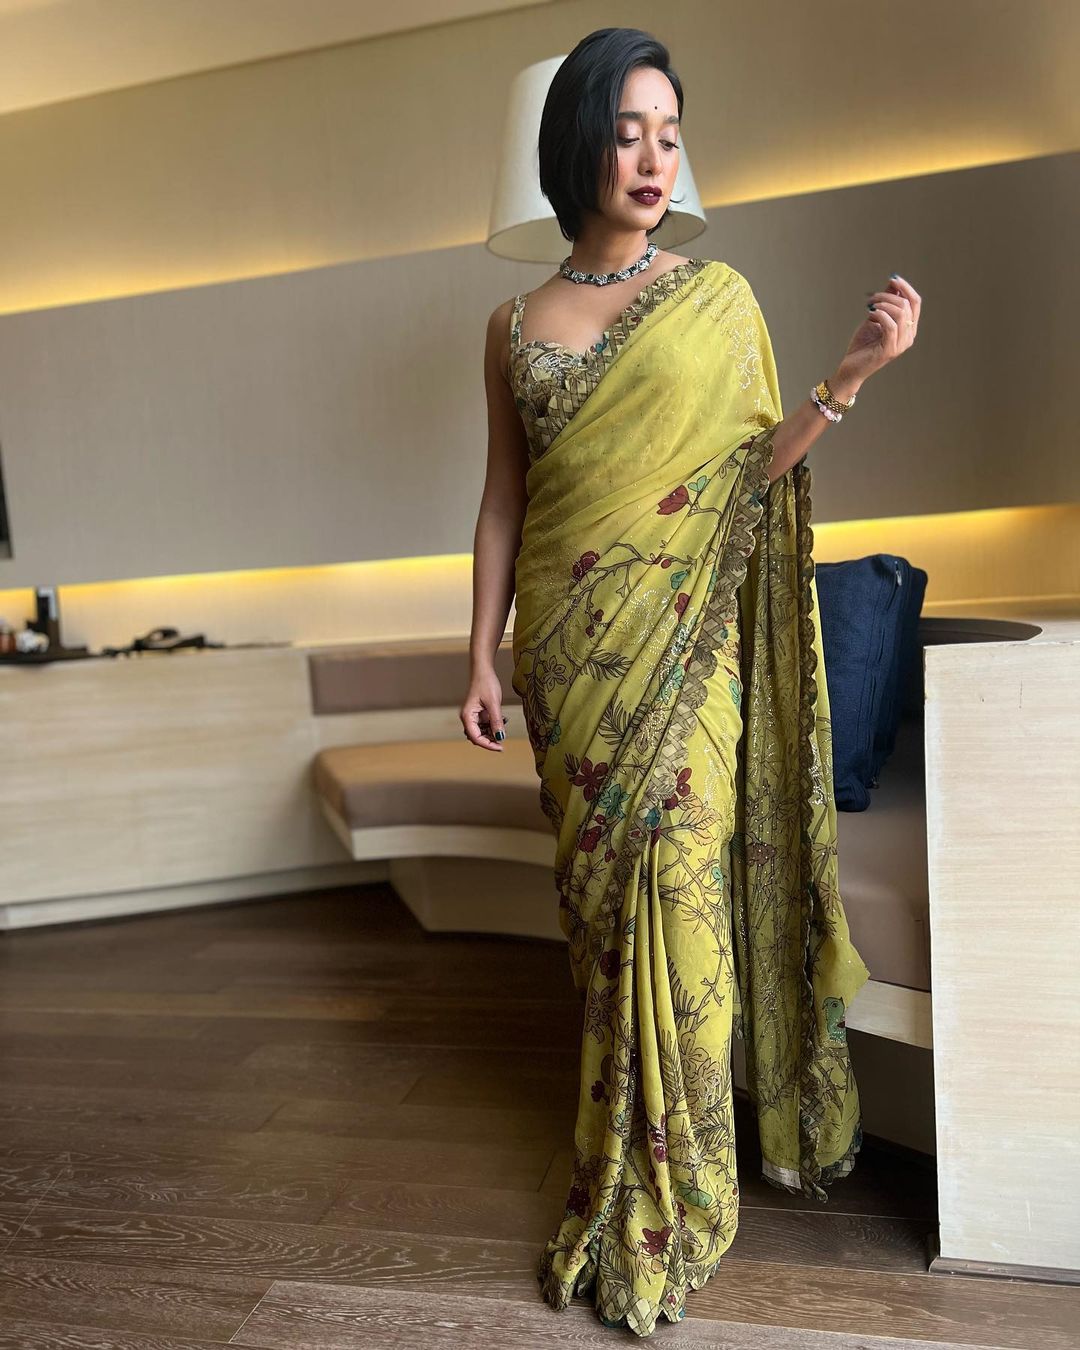 Sayani Gupta looks elegant in the green floral printed saree